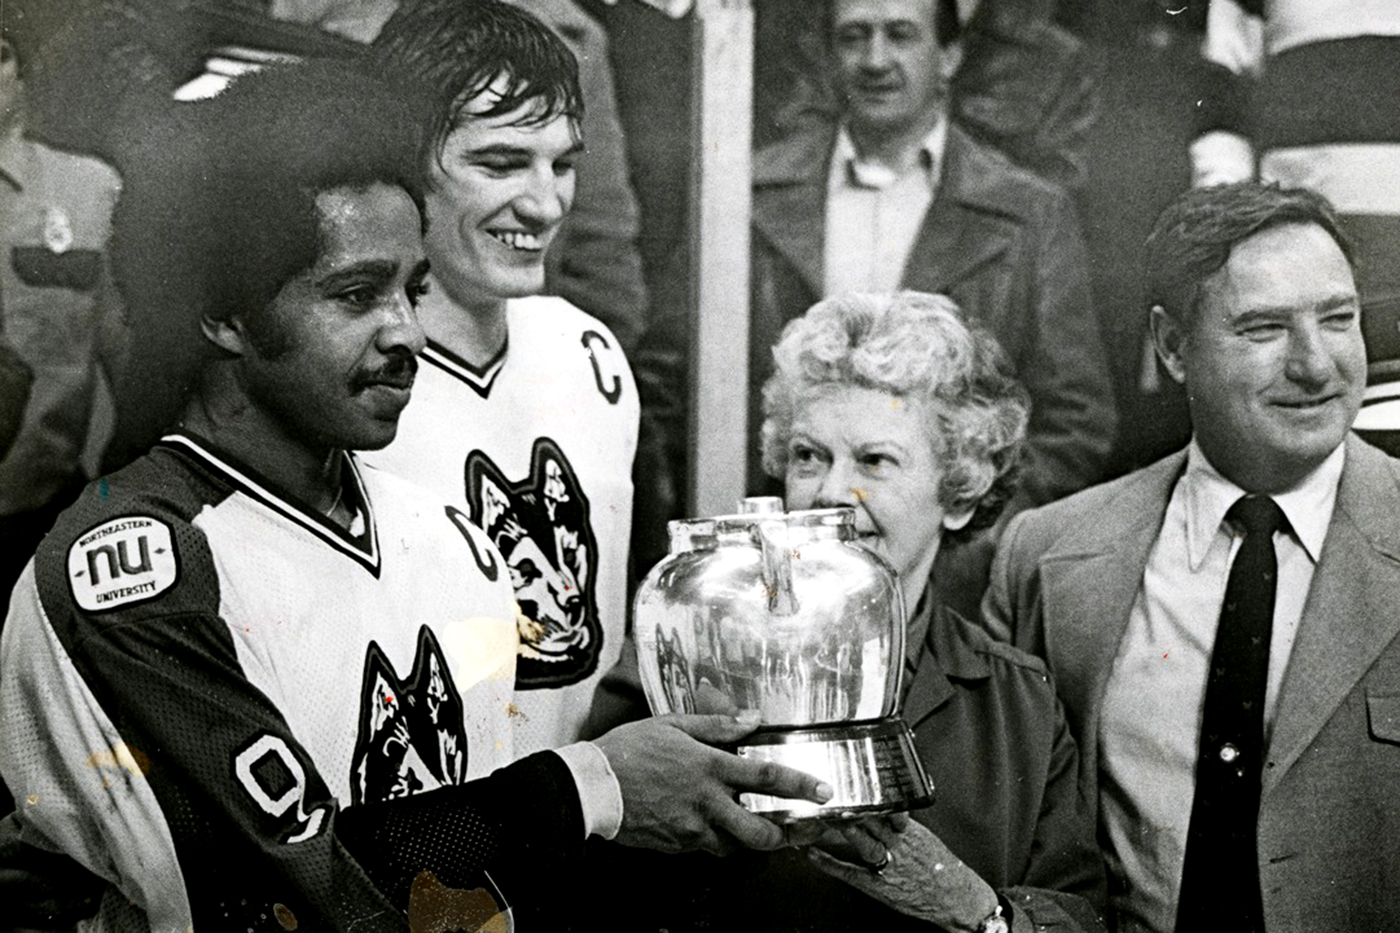 Wayne Turner receiving the Beanpot trophy in 1980